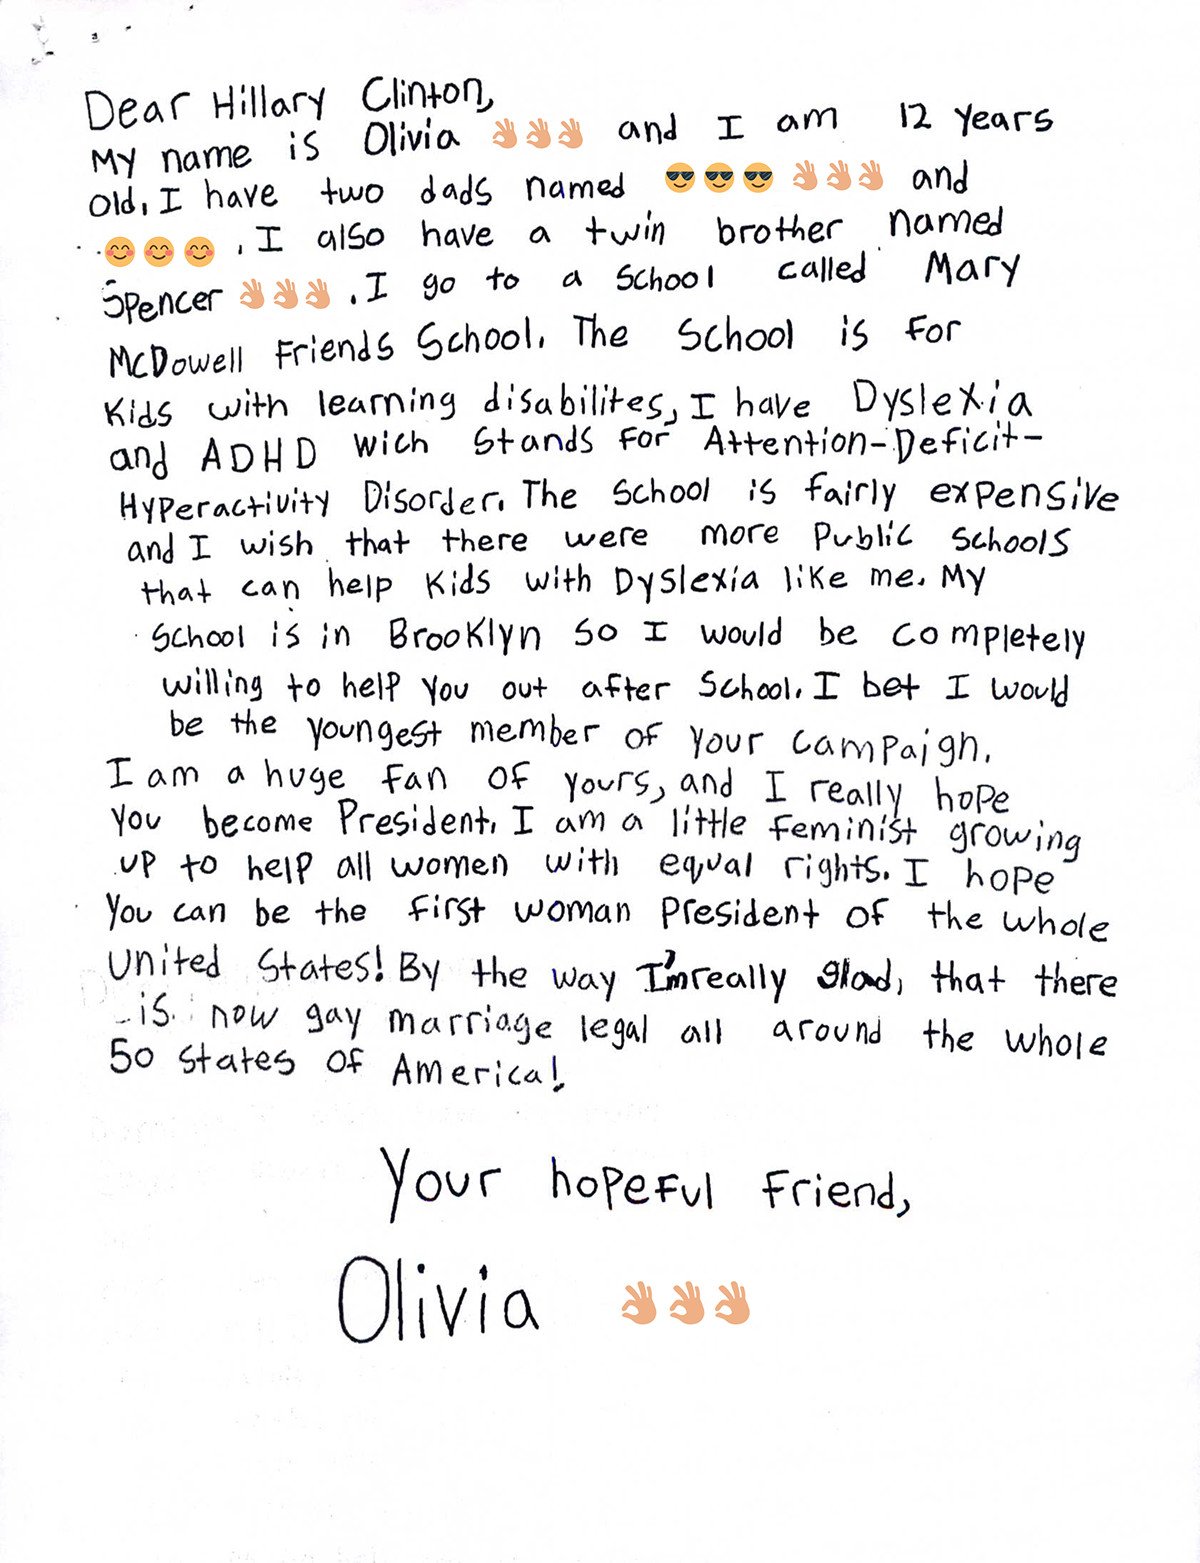 olivia-letter.original